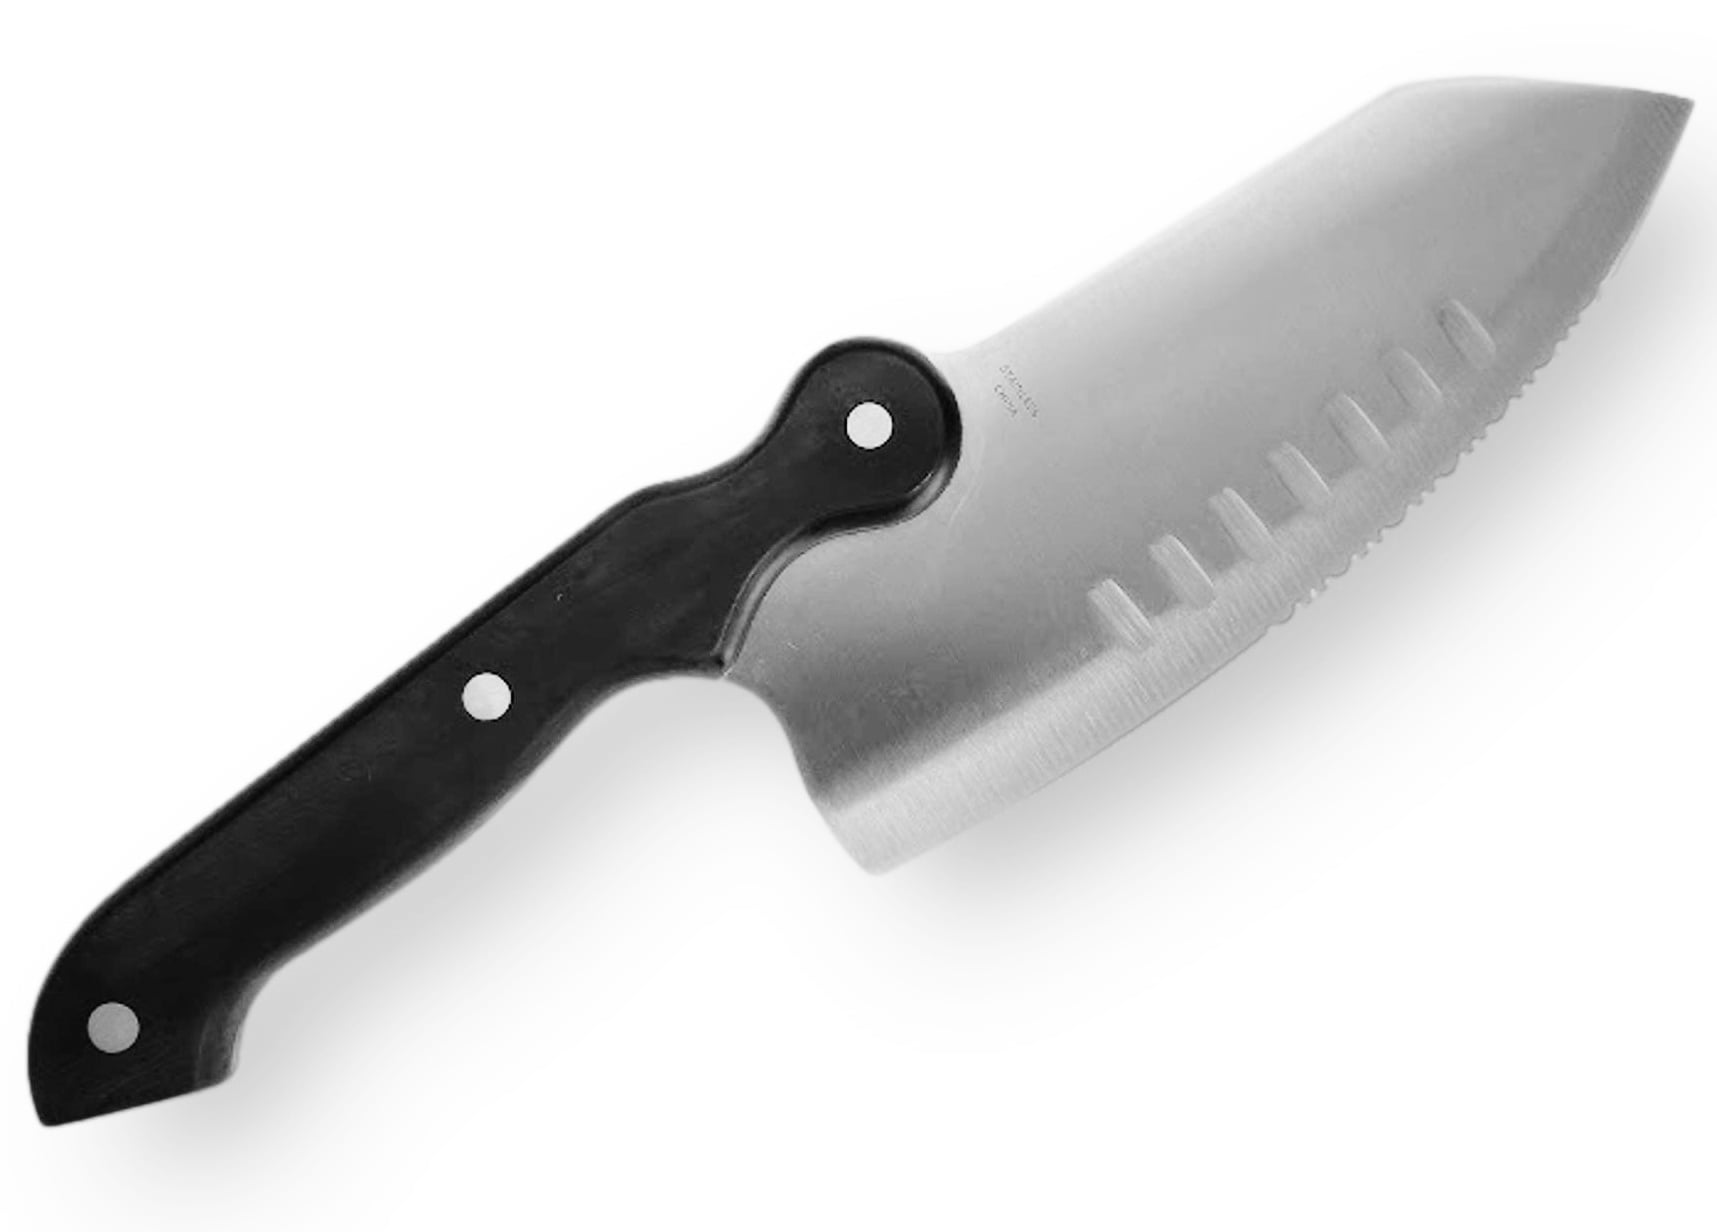 Ronco Six Star 20-Piece Rocker Cutlery Knife Set 